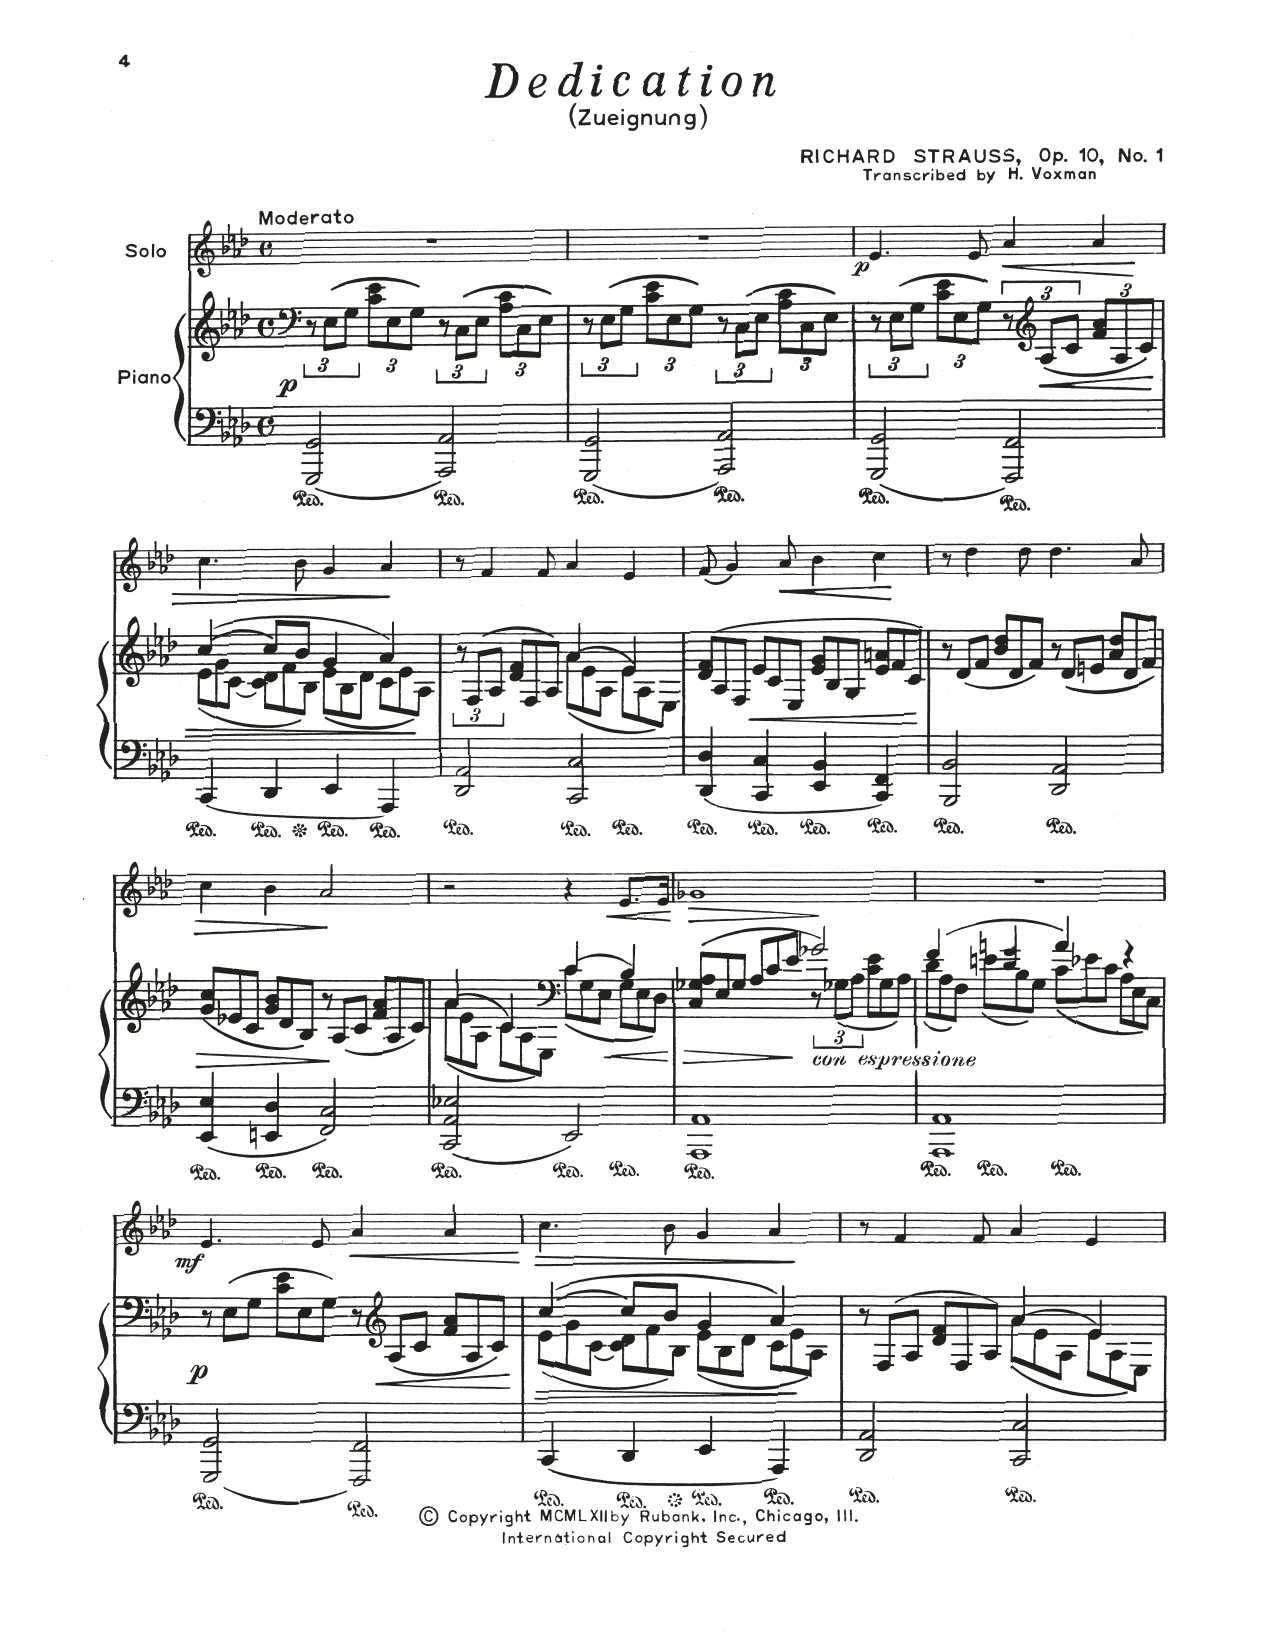 Richard Strauss Dedication Sheet Music Notes & Chords for Baritone B.C. and Piano - Download or Print PDF